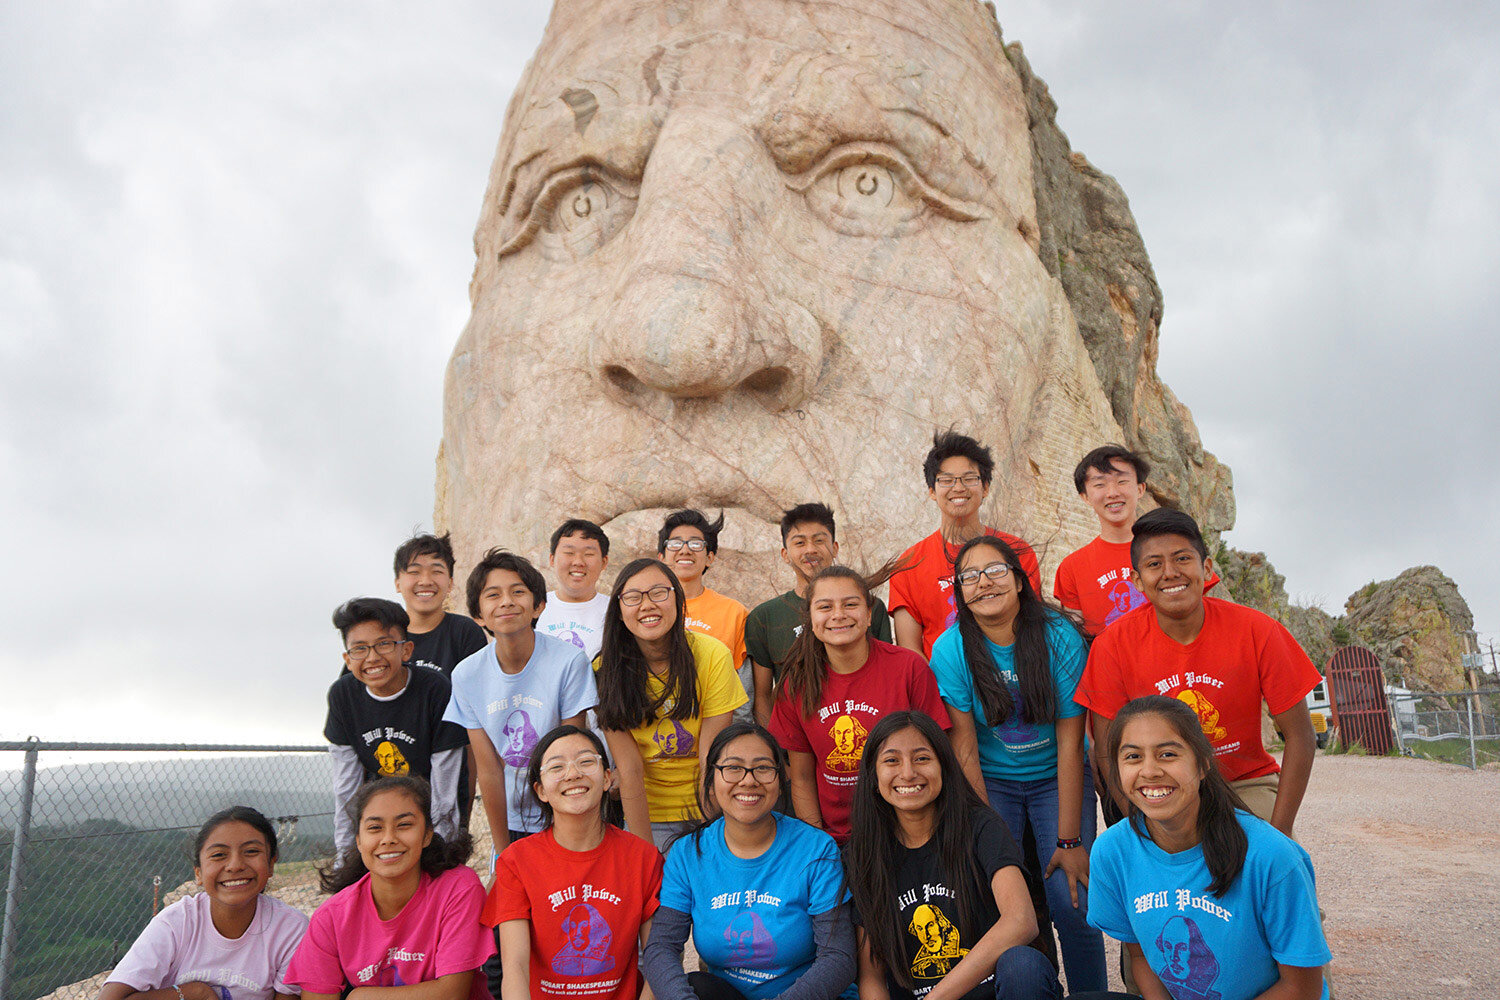  Follow Your Dreams: Crazy Horse Memorial in Custer, South Dakota 